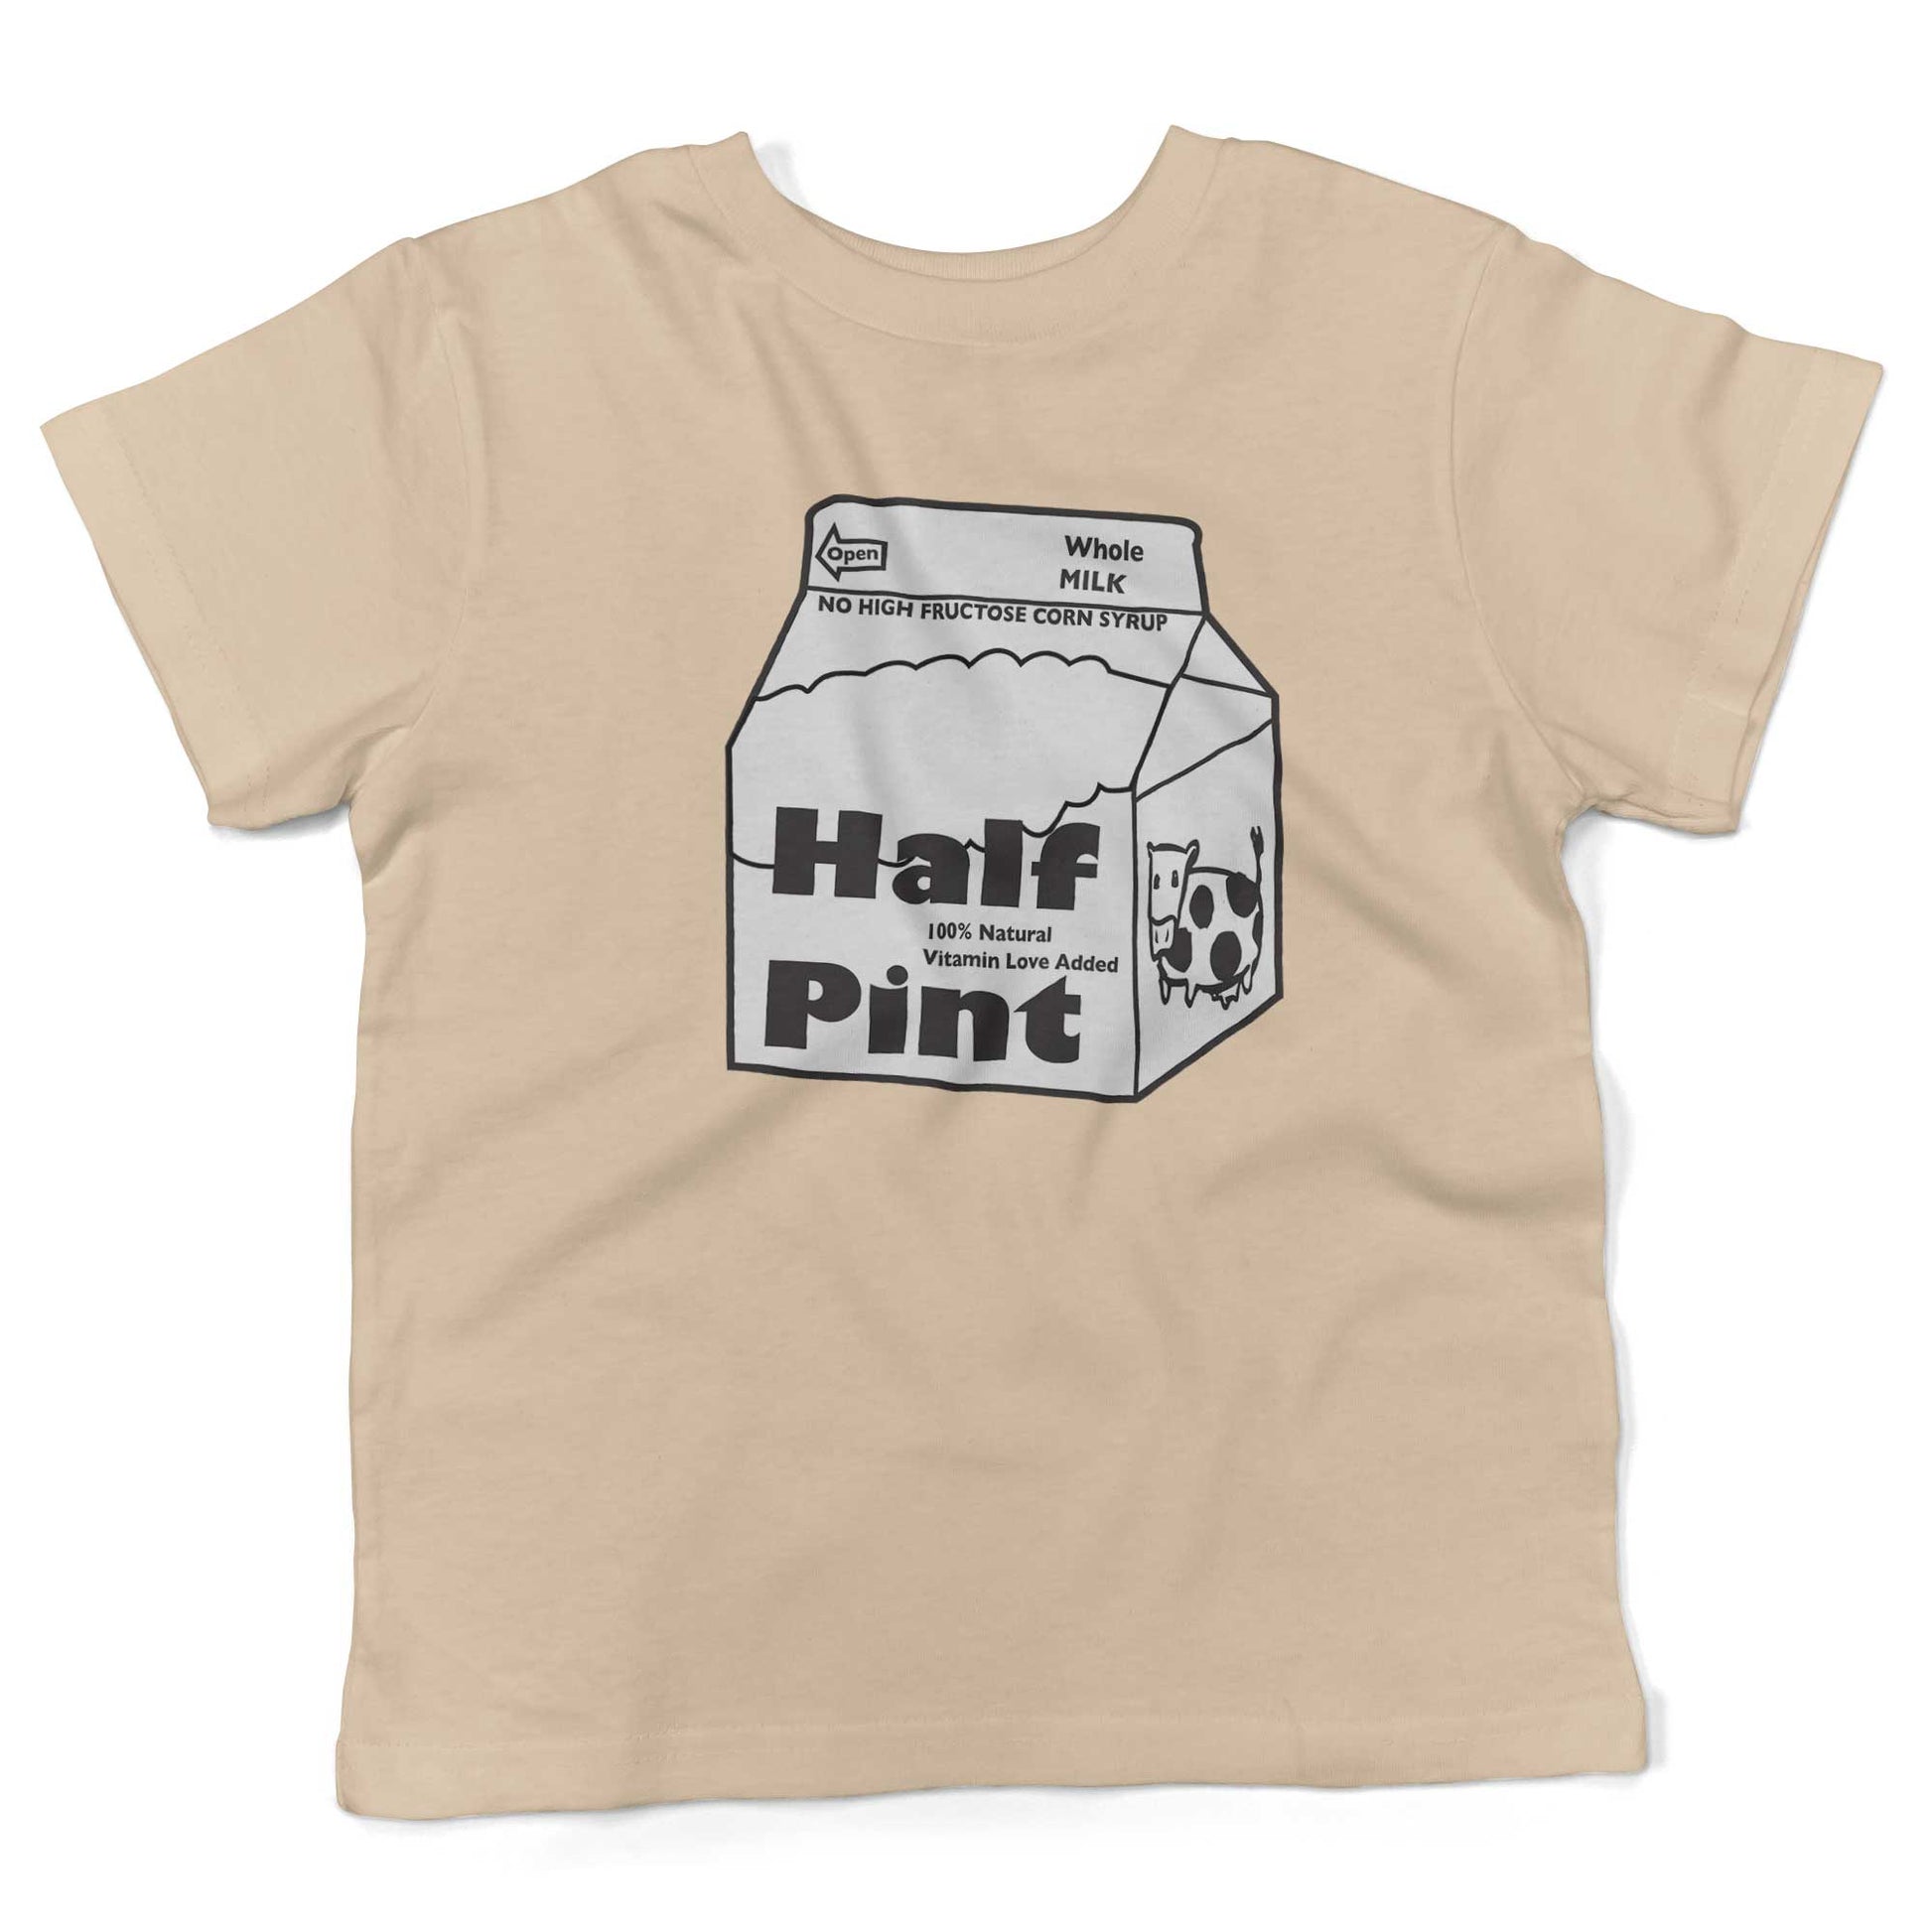 Half Pint Of Milk Toddler Shirt-Organic Natural-2T